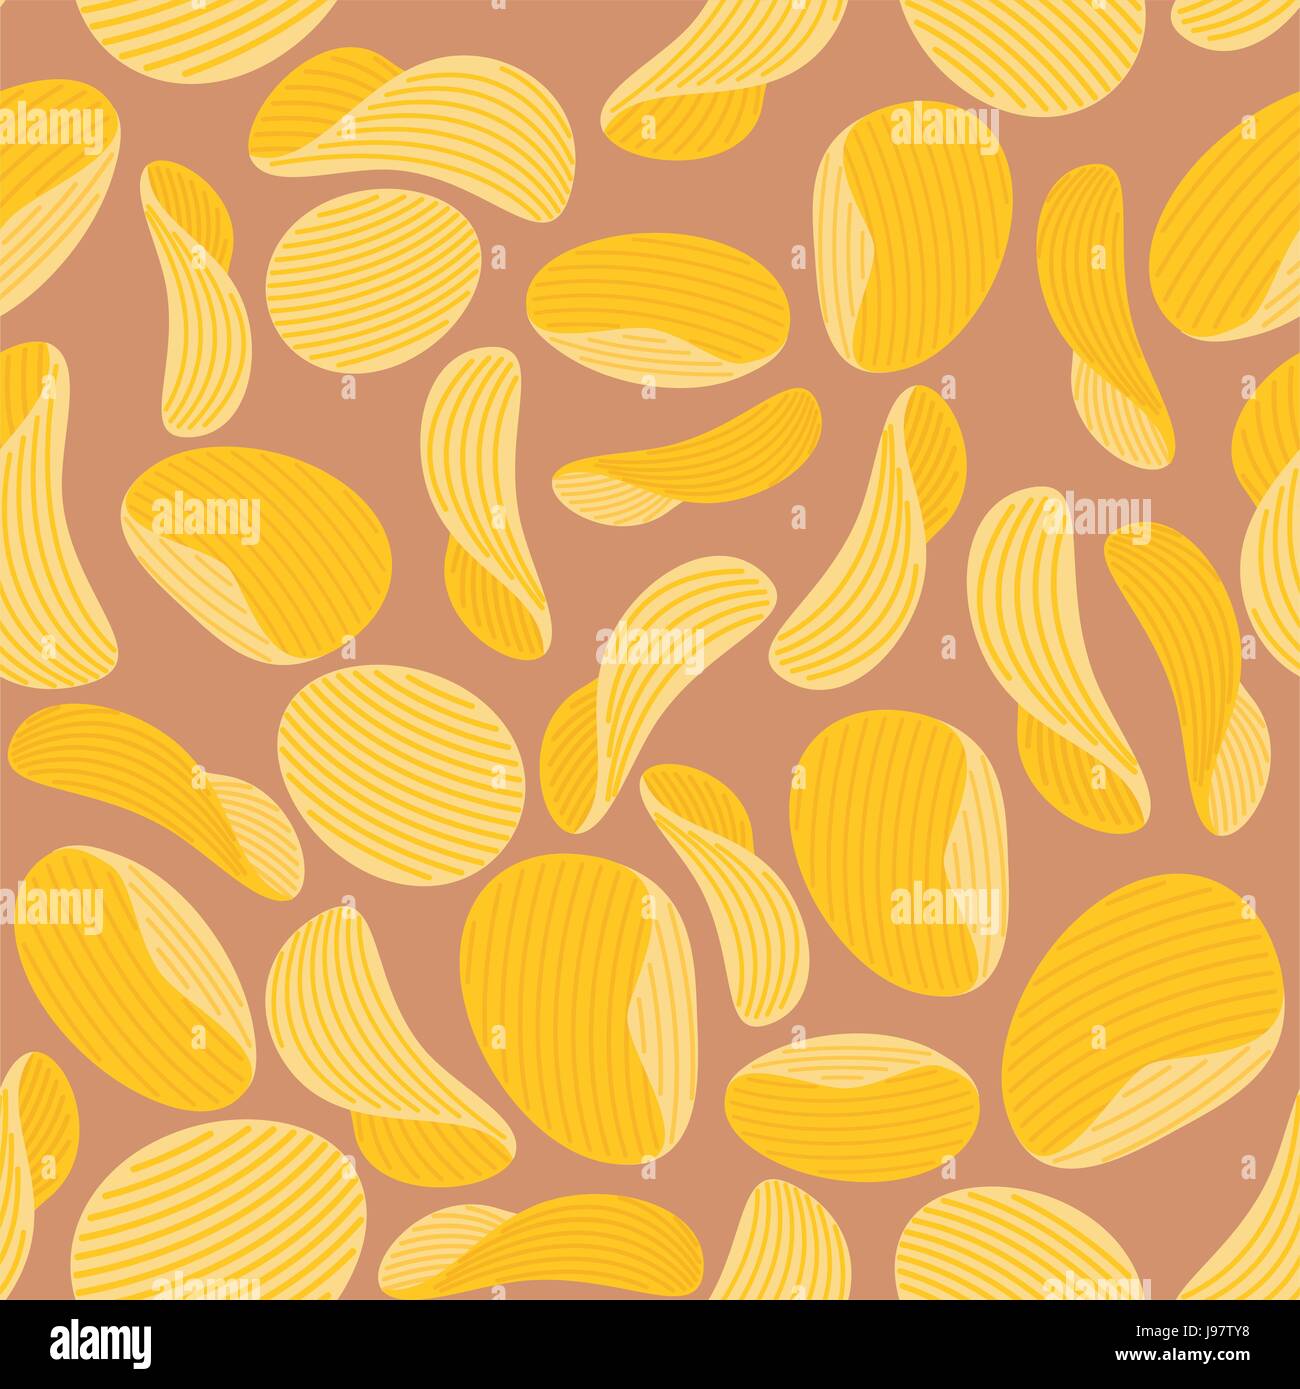 Kartoffel-Chips Hintergrund. Nahtlose Muster Wellpappe-Chips. Vektor-illustration Stock Vektor